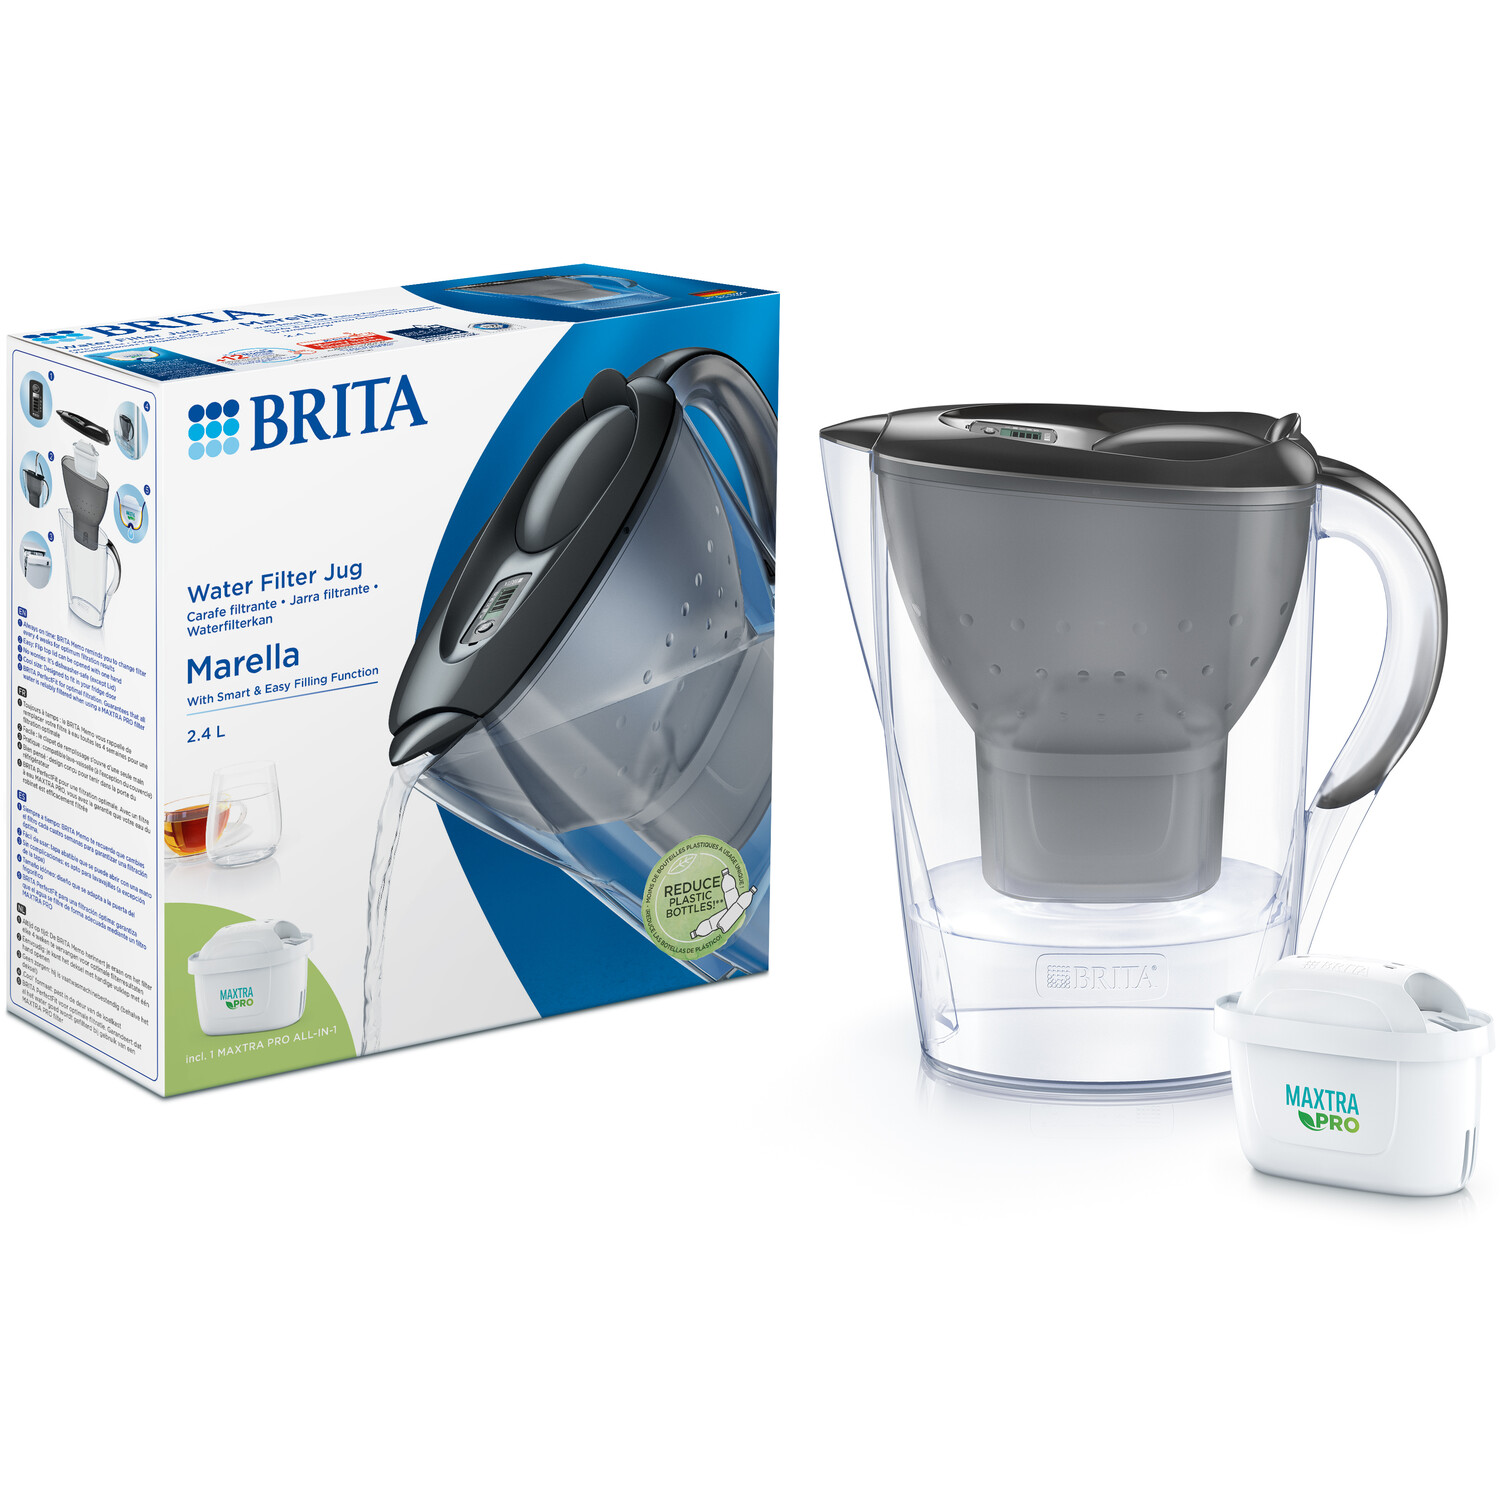 BRITA Marella 2.4L Cool Graphite Water Filter Jug Image 3